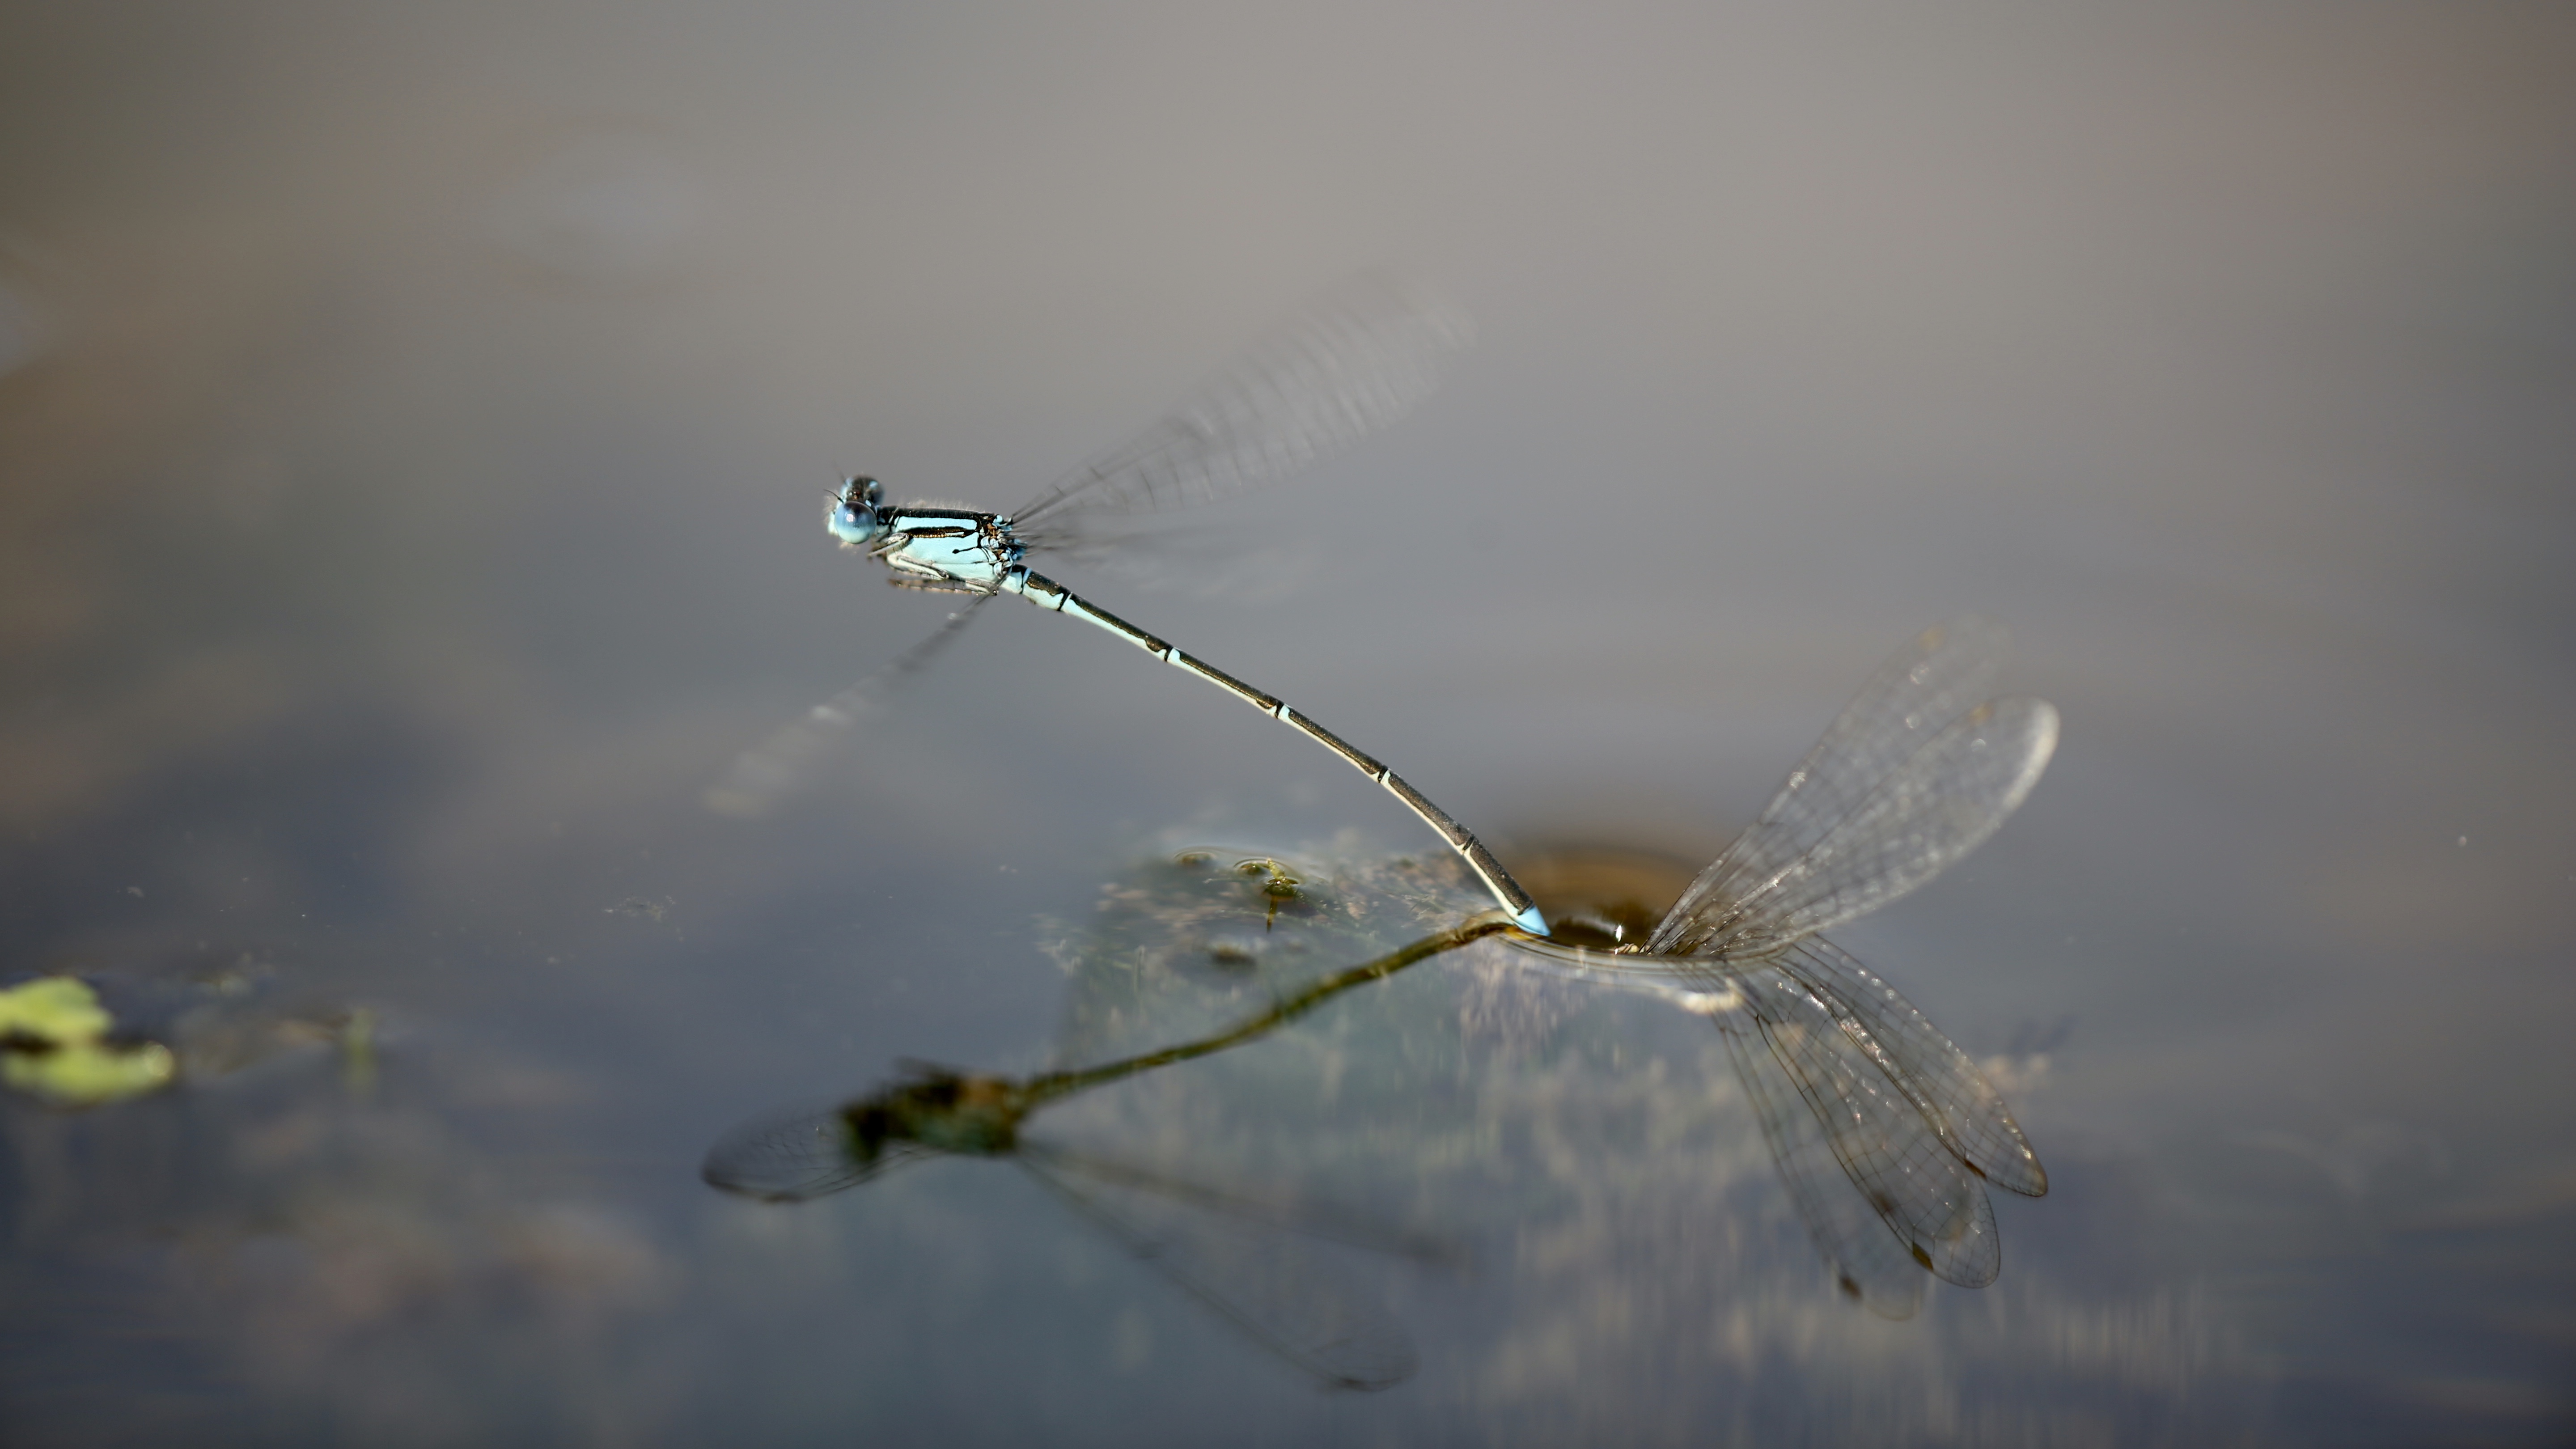 Male dragonflies, damselflies escort females to ensure reproduction - CGTN